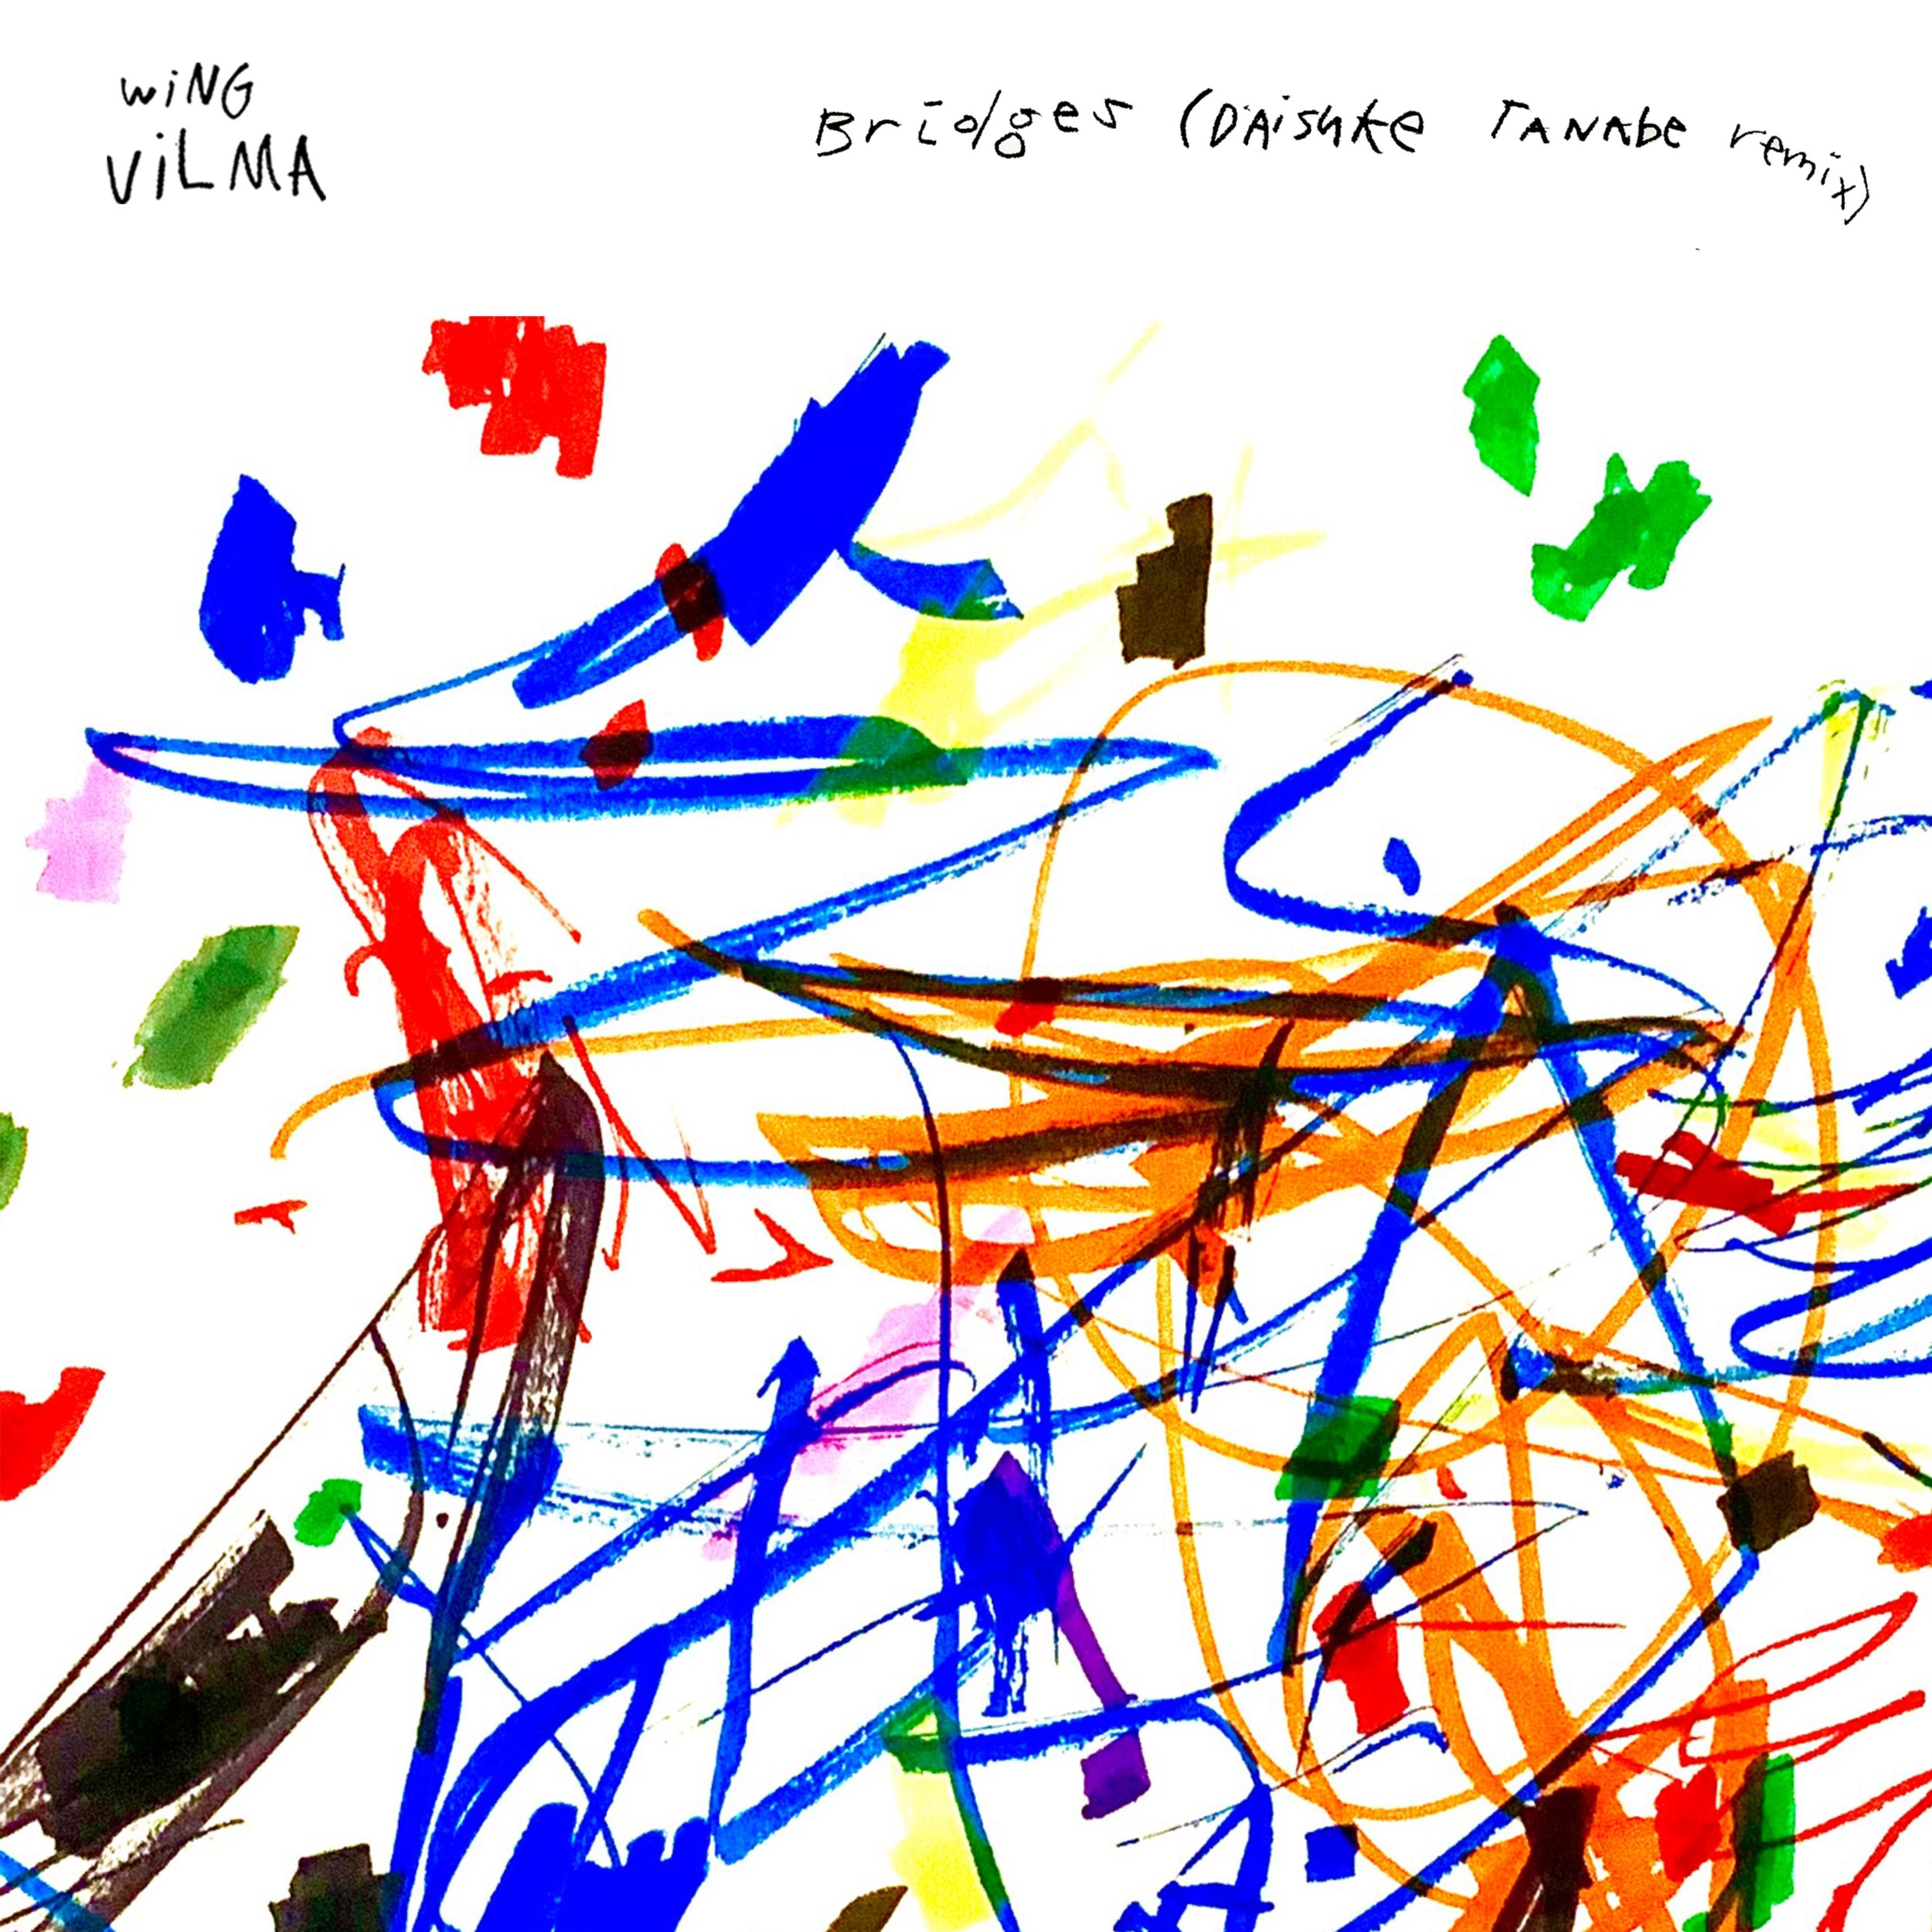 Wing Vilma - Bridges (Daisuke Tanabe Remix) – $1.00